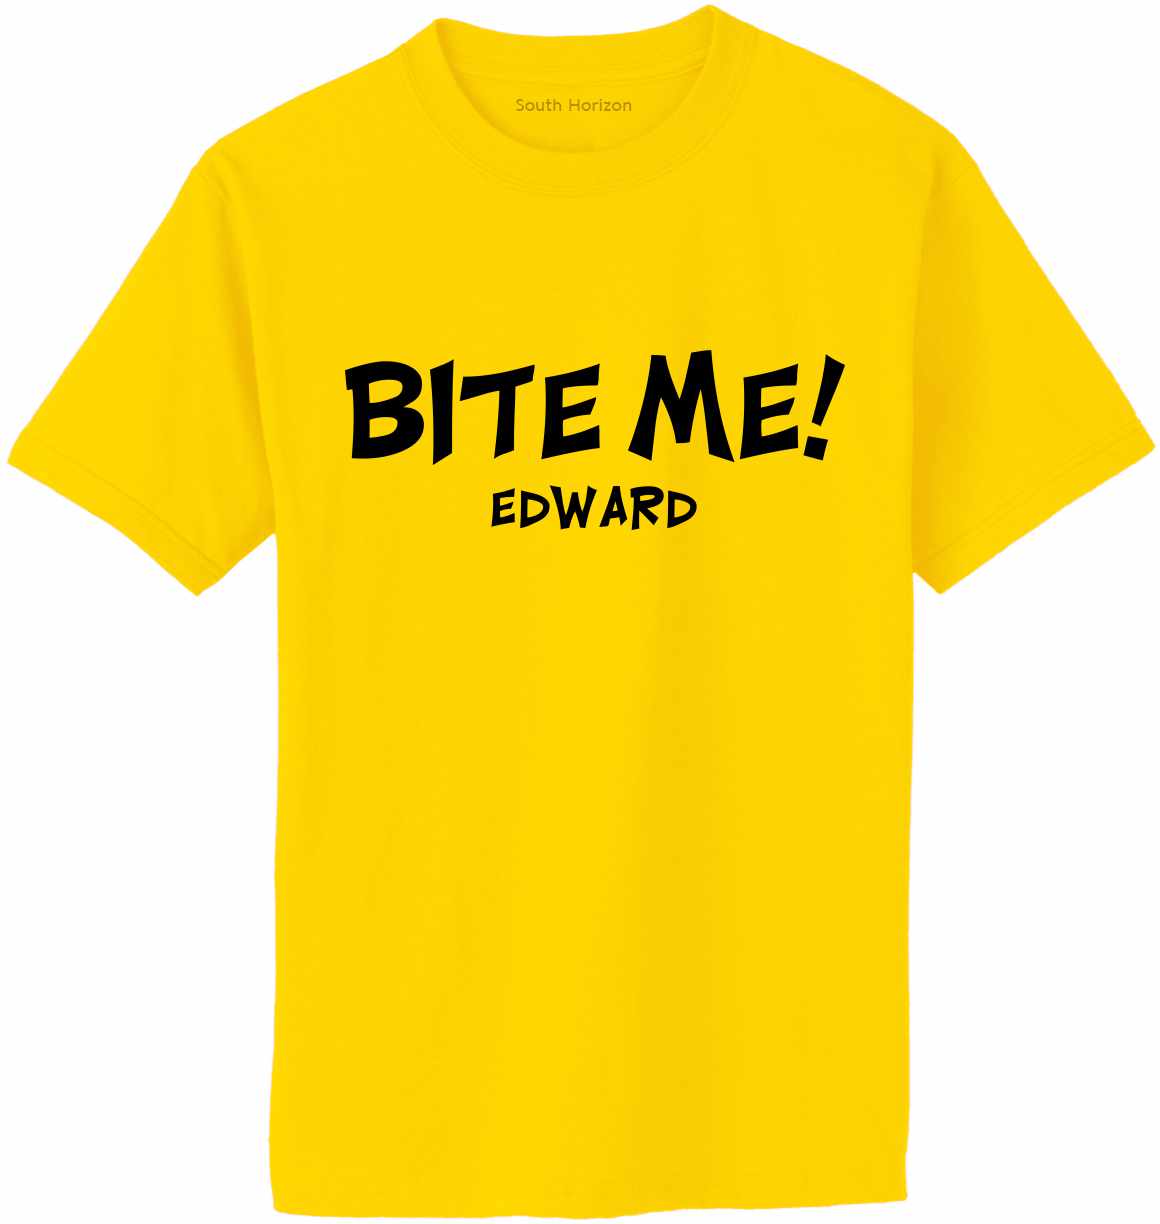 BITE ME EDWARD on Adult T-Shirt (#289-1)